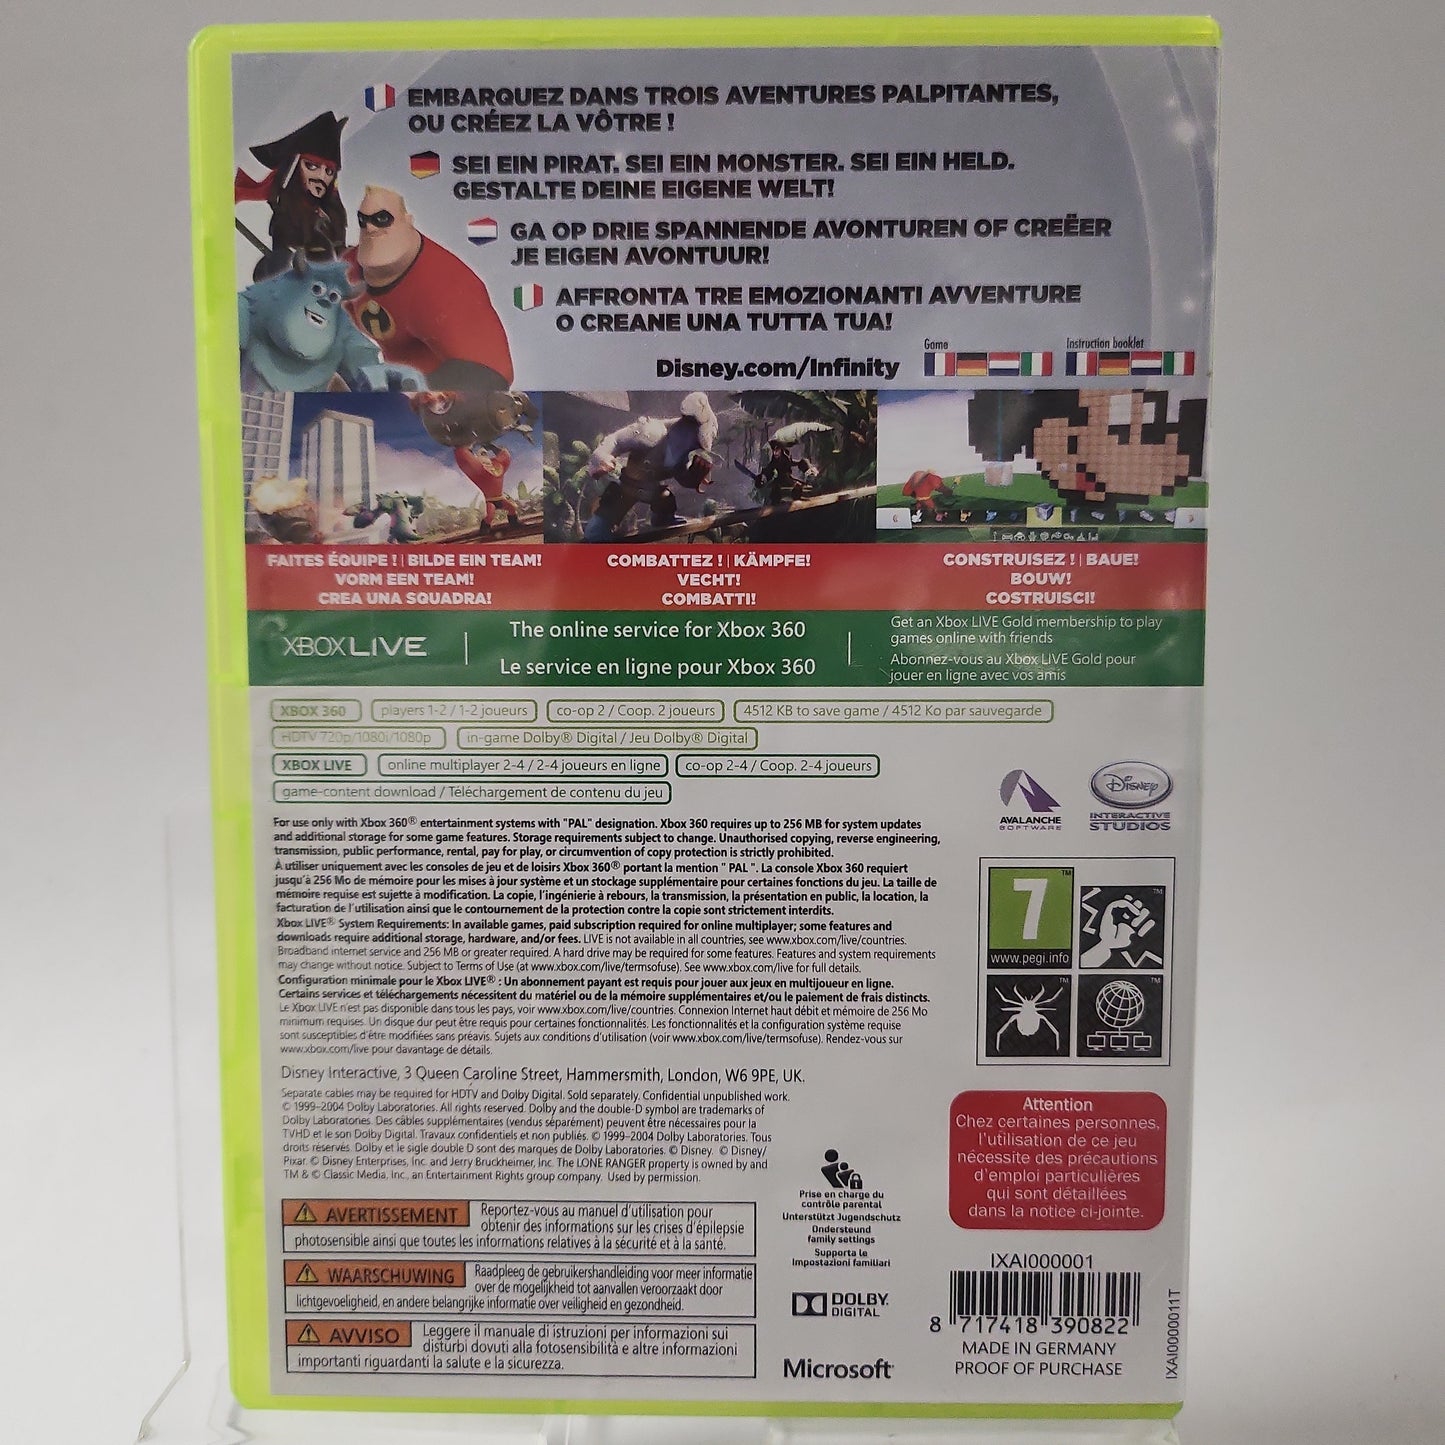 Disney Infinity 1.0 (game only) Xbox 360